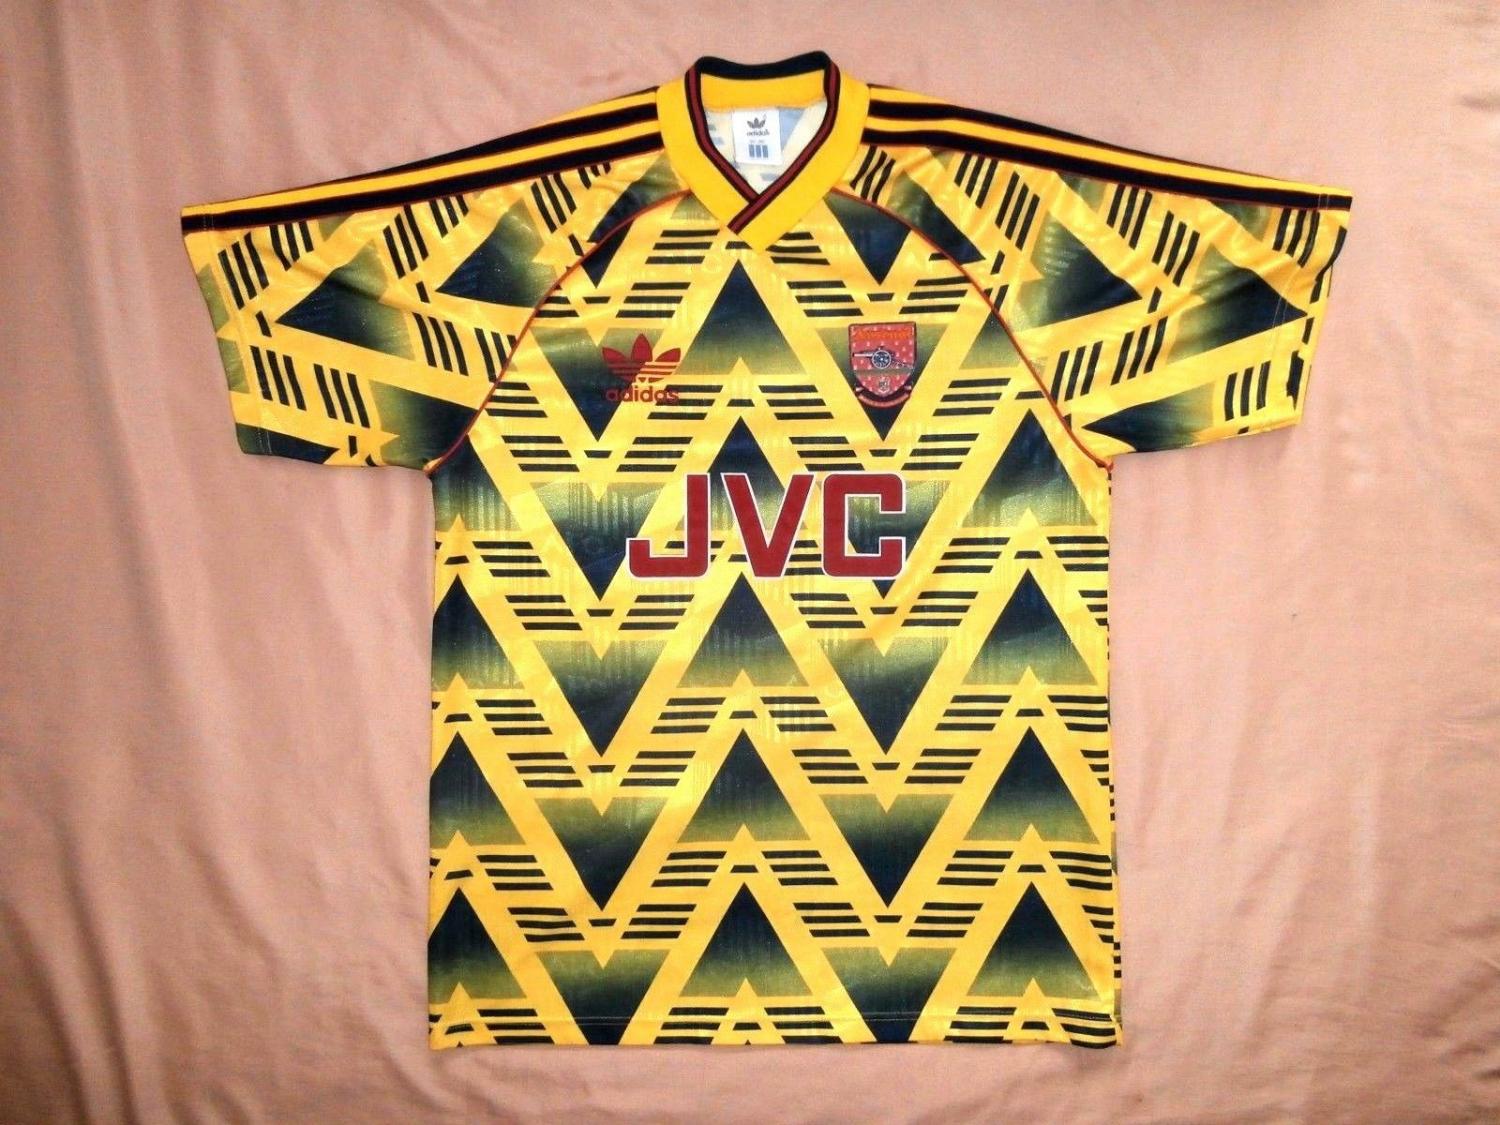 arsenal shirt 1991